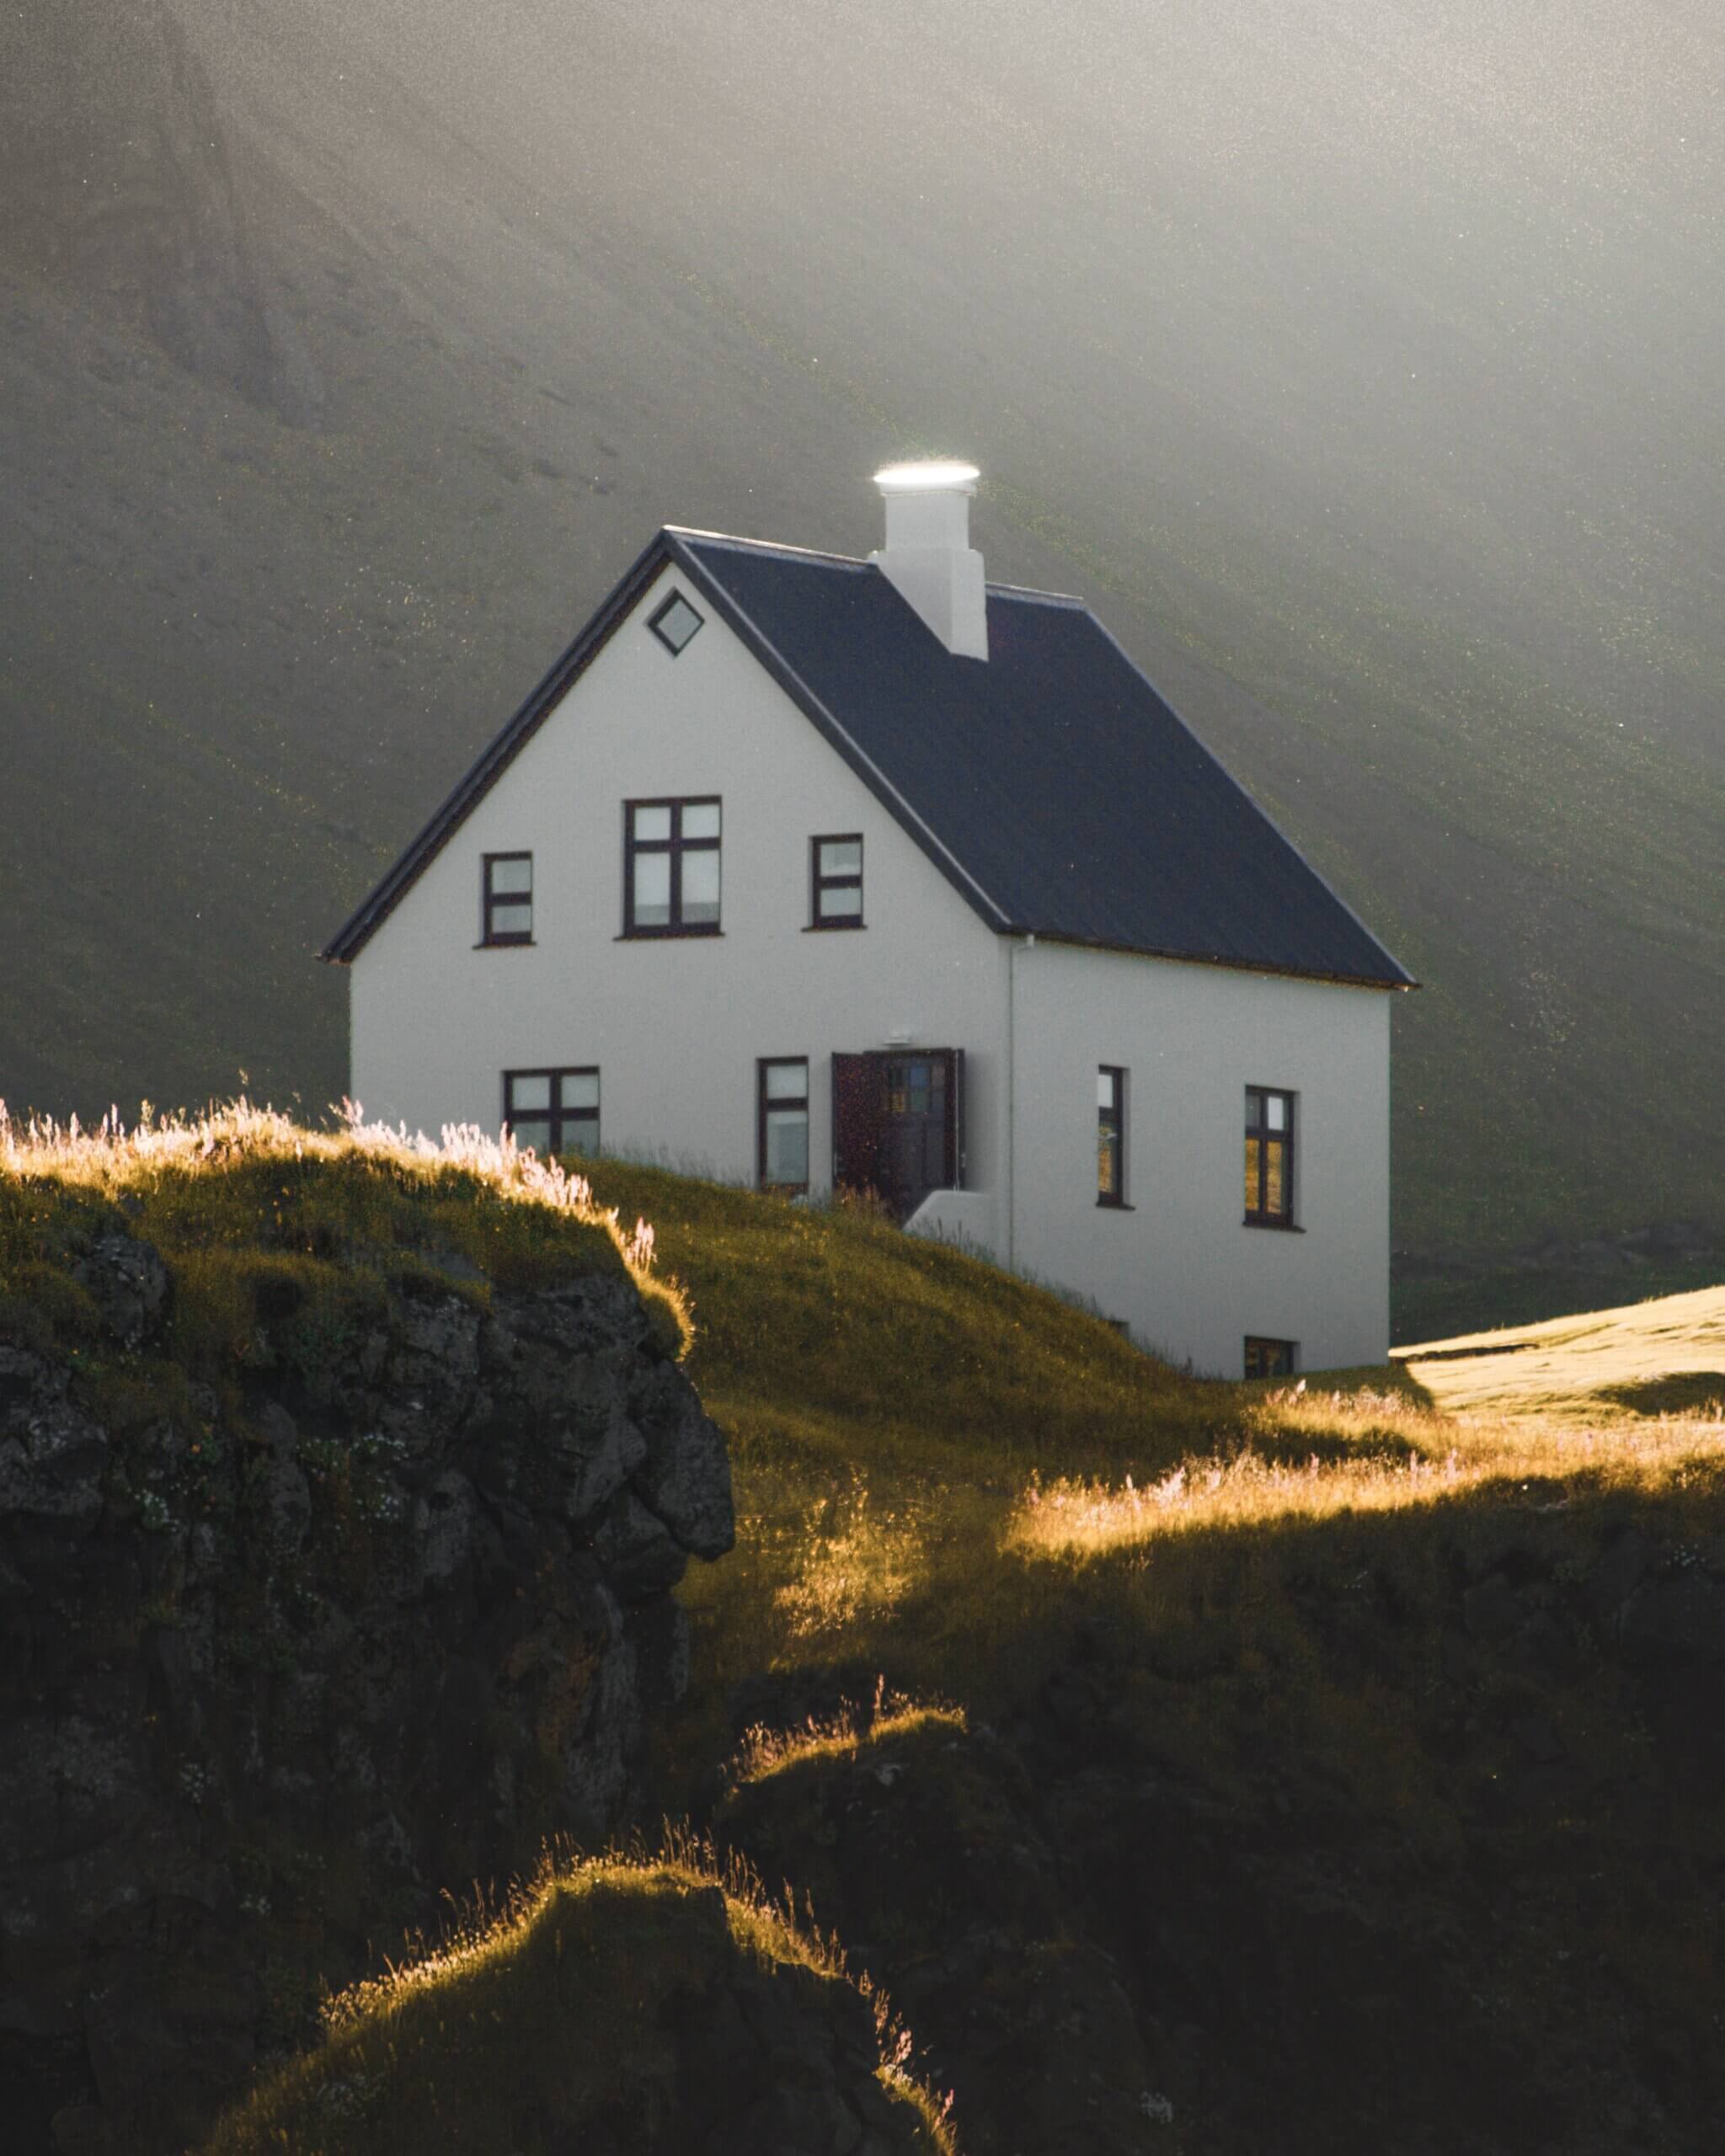 Charming house near the harbor in Arnarstapi, Iceland by Levin Joschko via Unsplash.